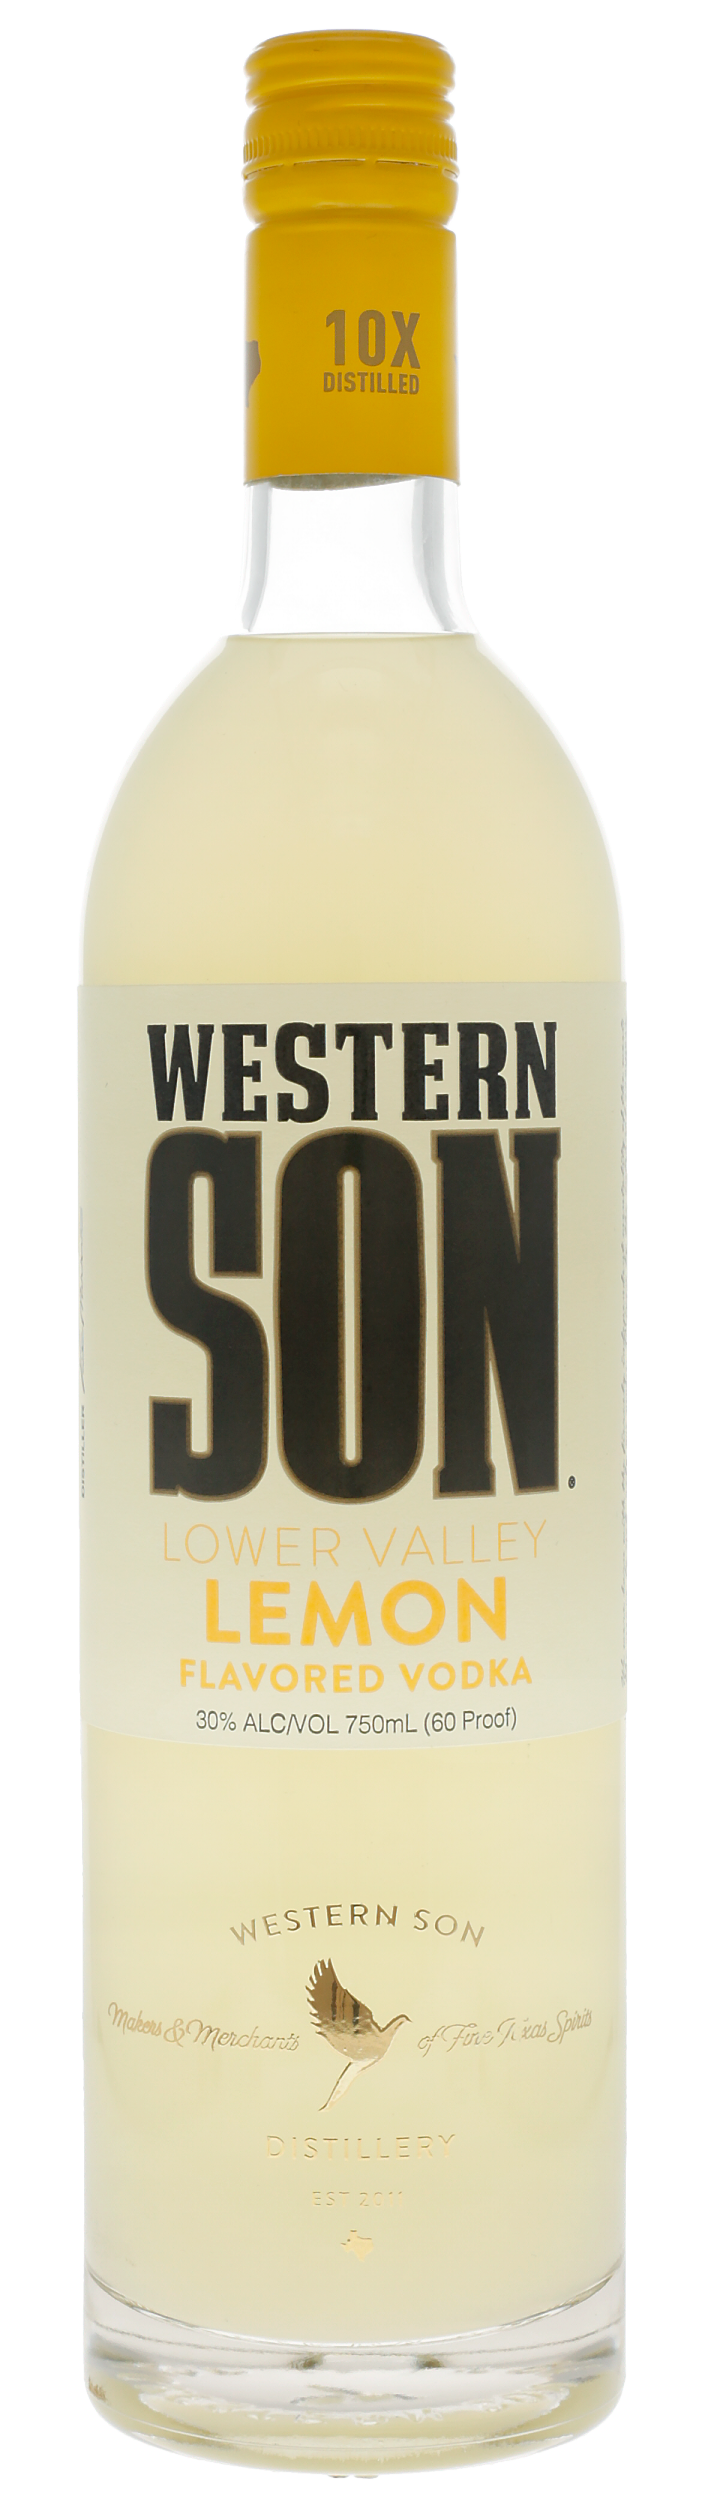 Western Son Lemon Flavored Vodka